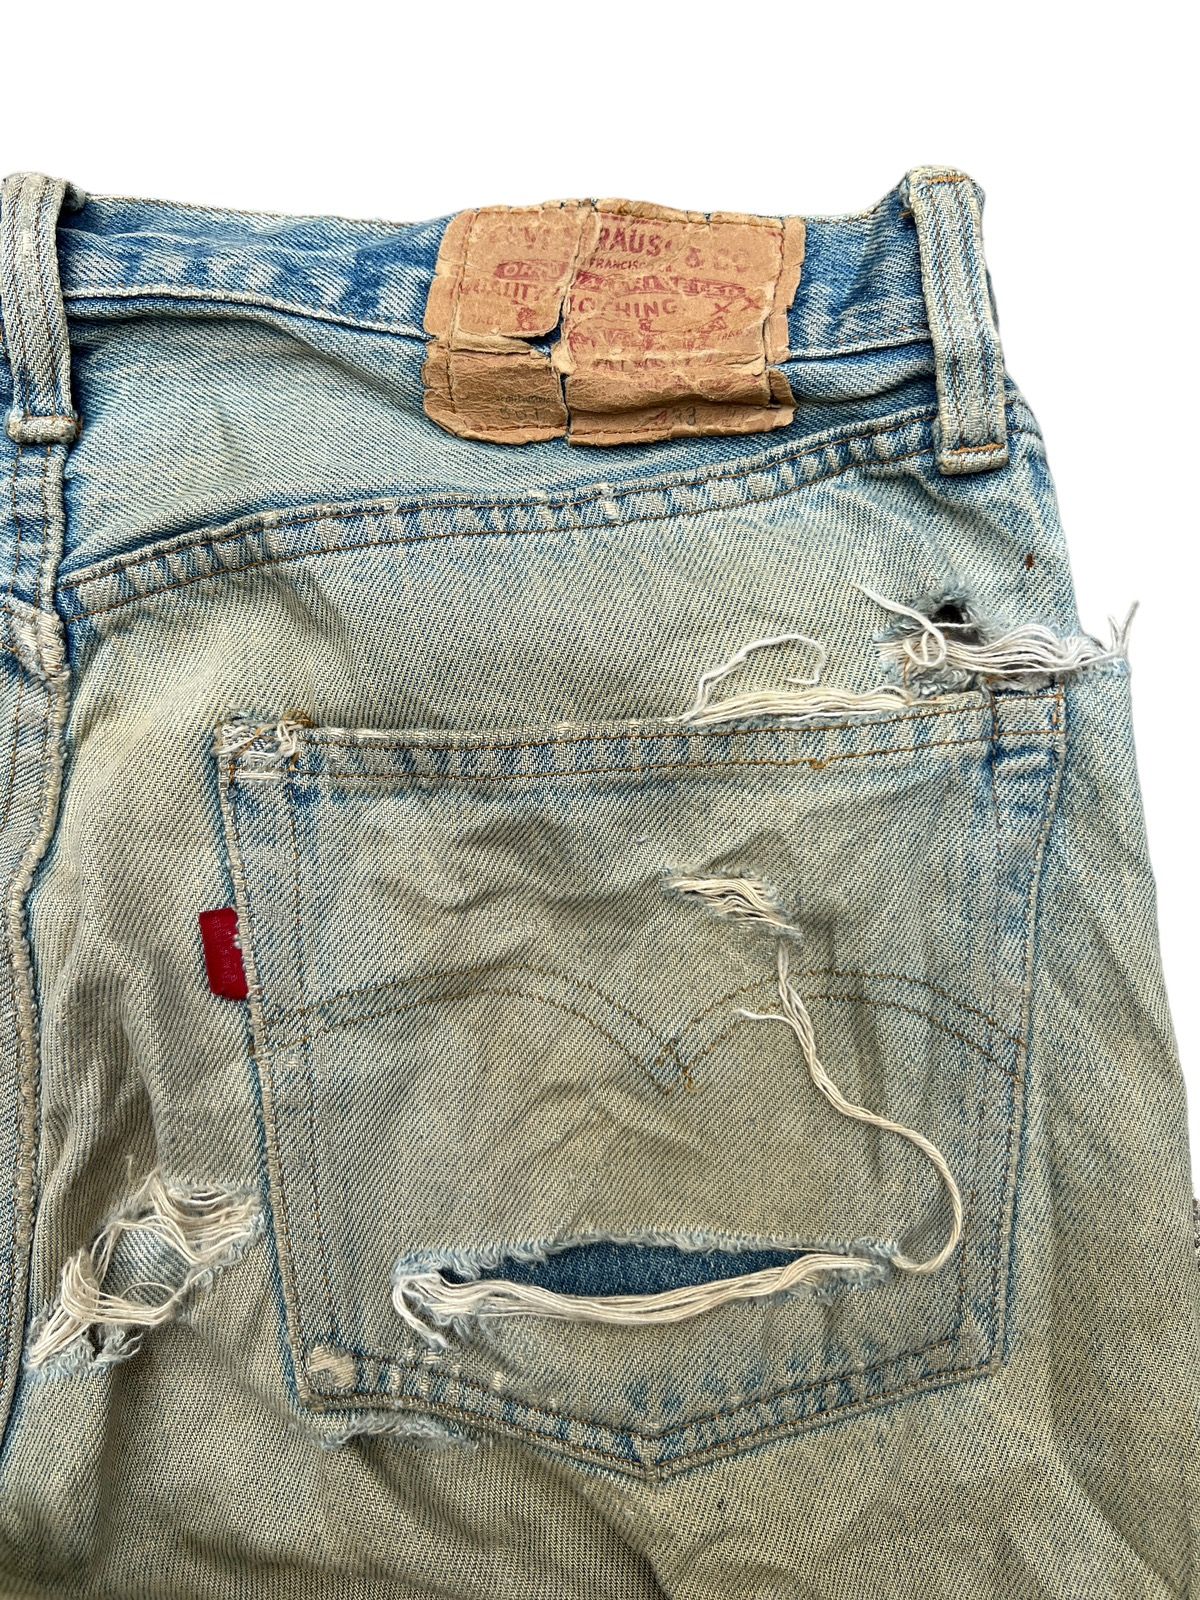 Vintage 70s Levi’s 501 Selvedge Distressed Denim Jeans 32x31 - 8